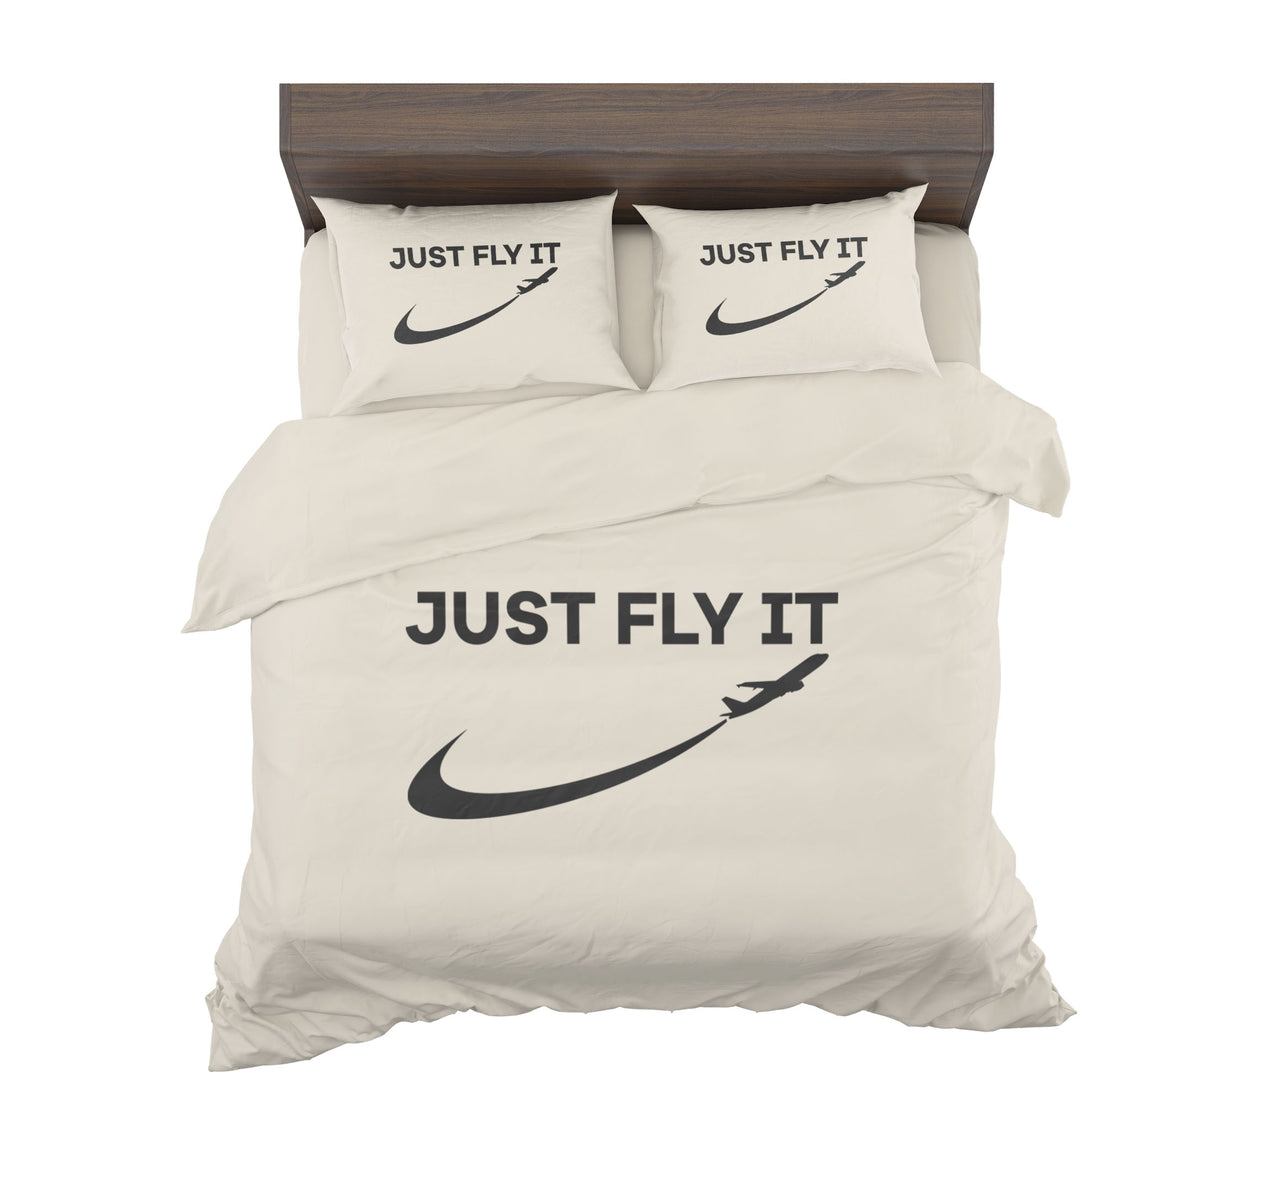 Just Fly It 2 Designed Bedding Sets